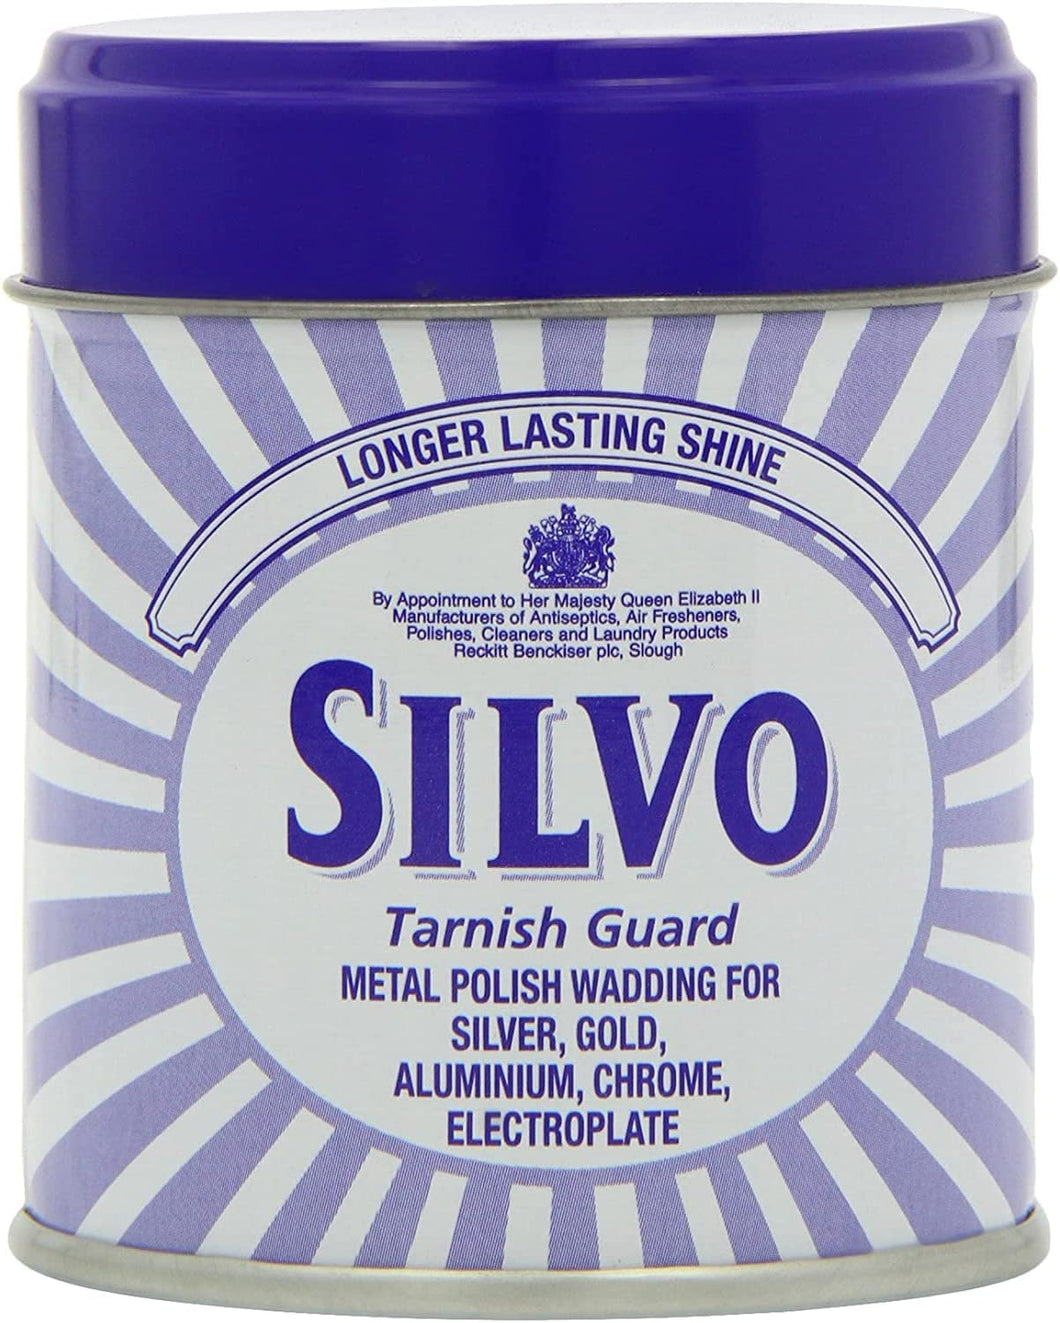 Silvo Tarnish Guard Silver Polish Wadding